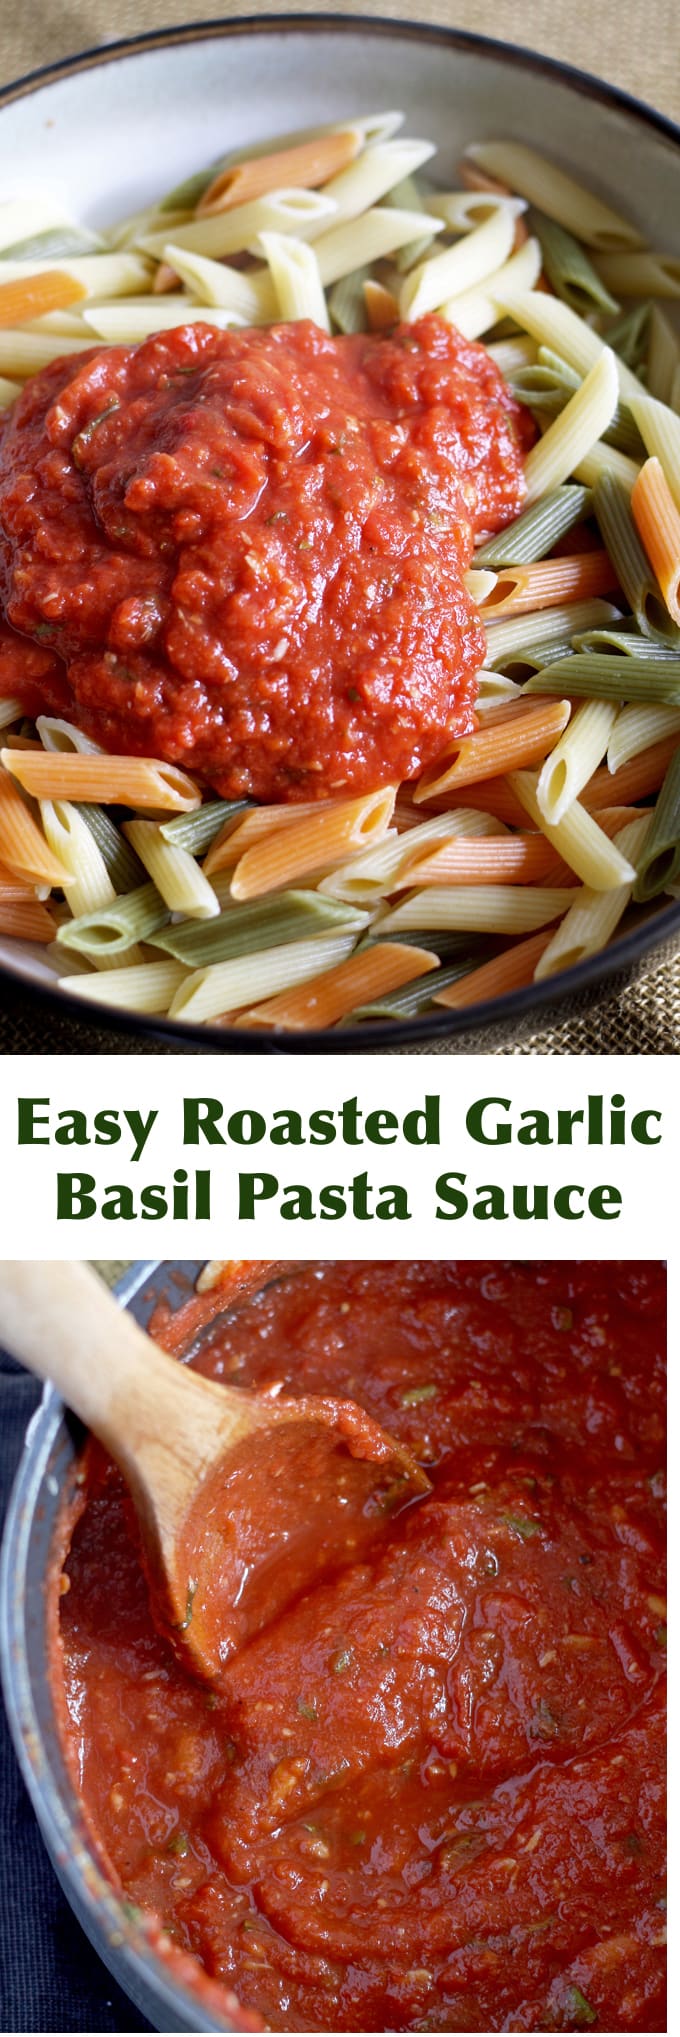 Easy Roasted Garlic Basil Tomato Sauce - bring on the pasta and start eating dinner! | honeyandbirch.com